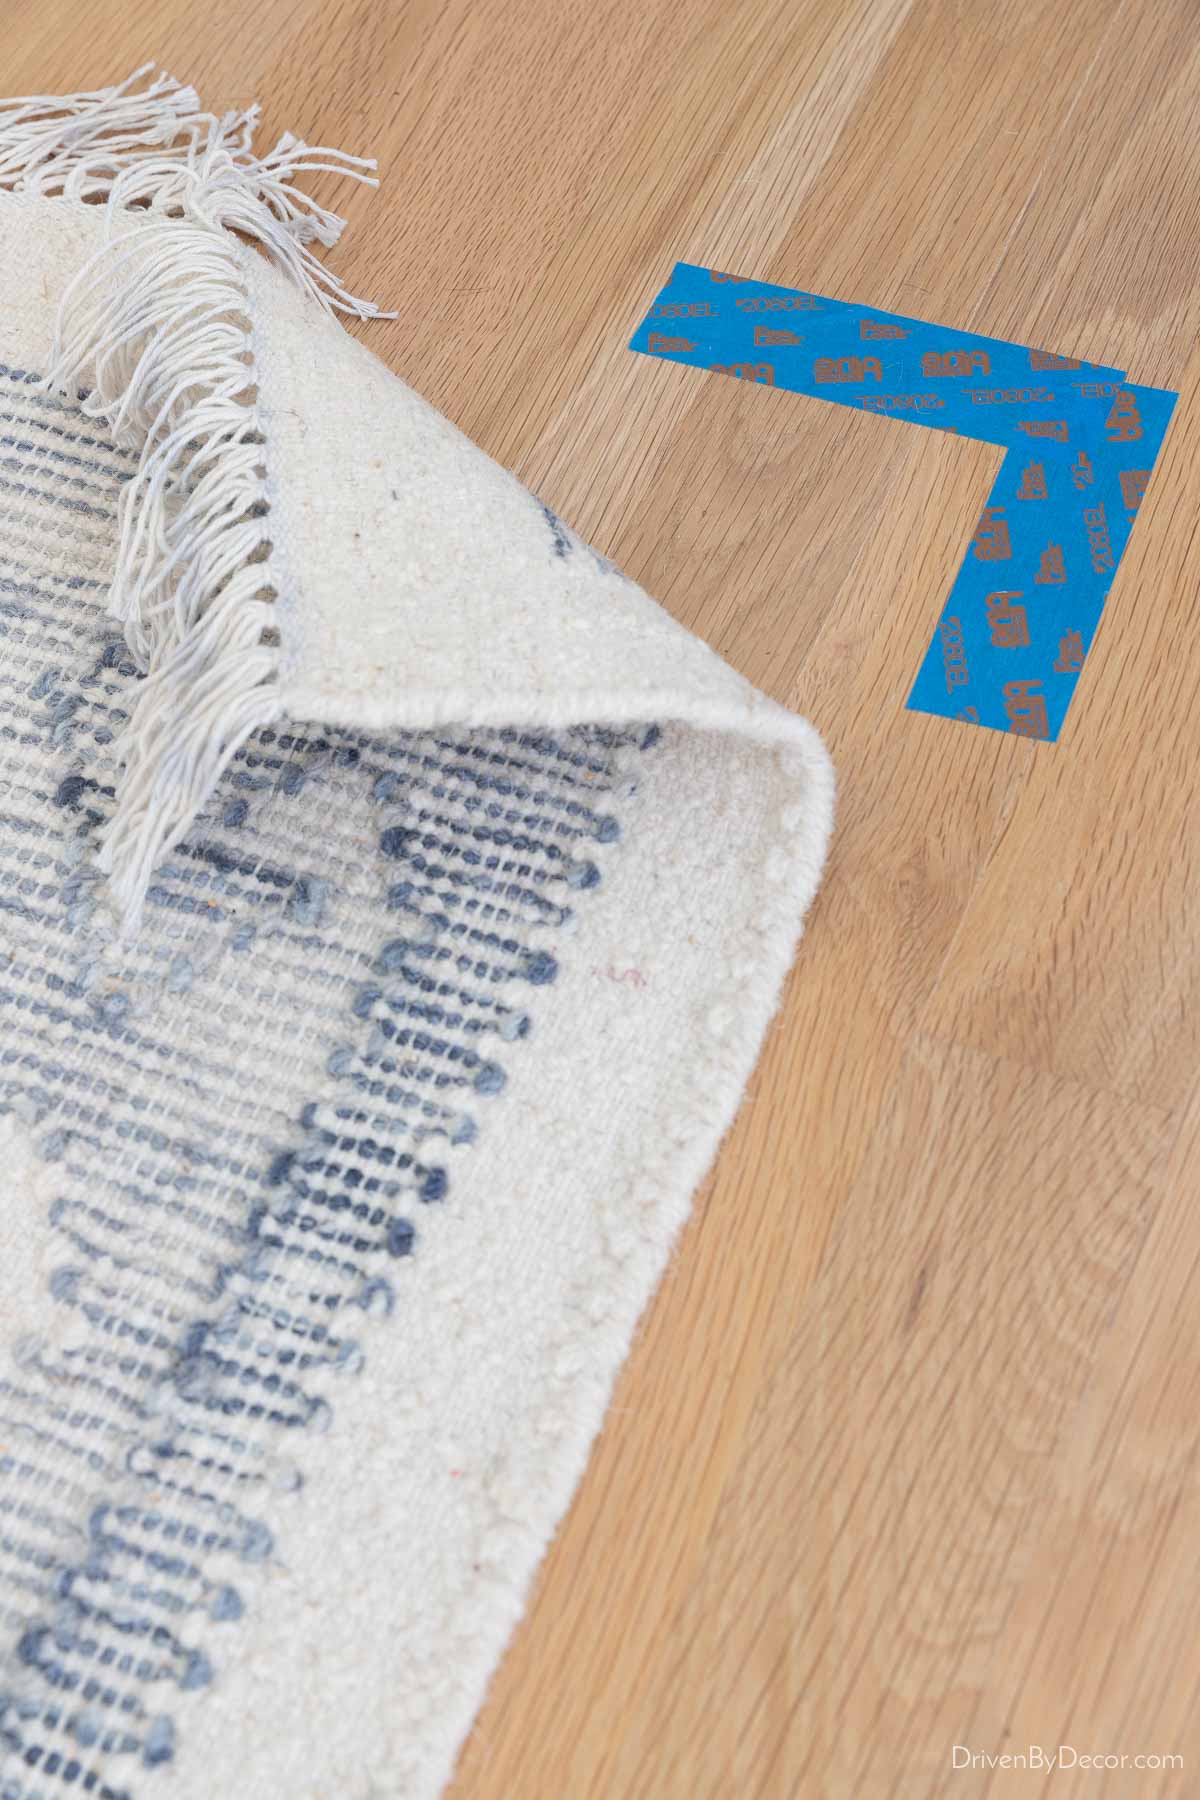 Corner of rug marked with tape on hardwood floor